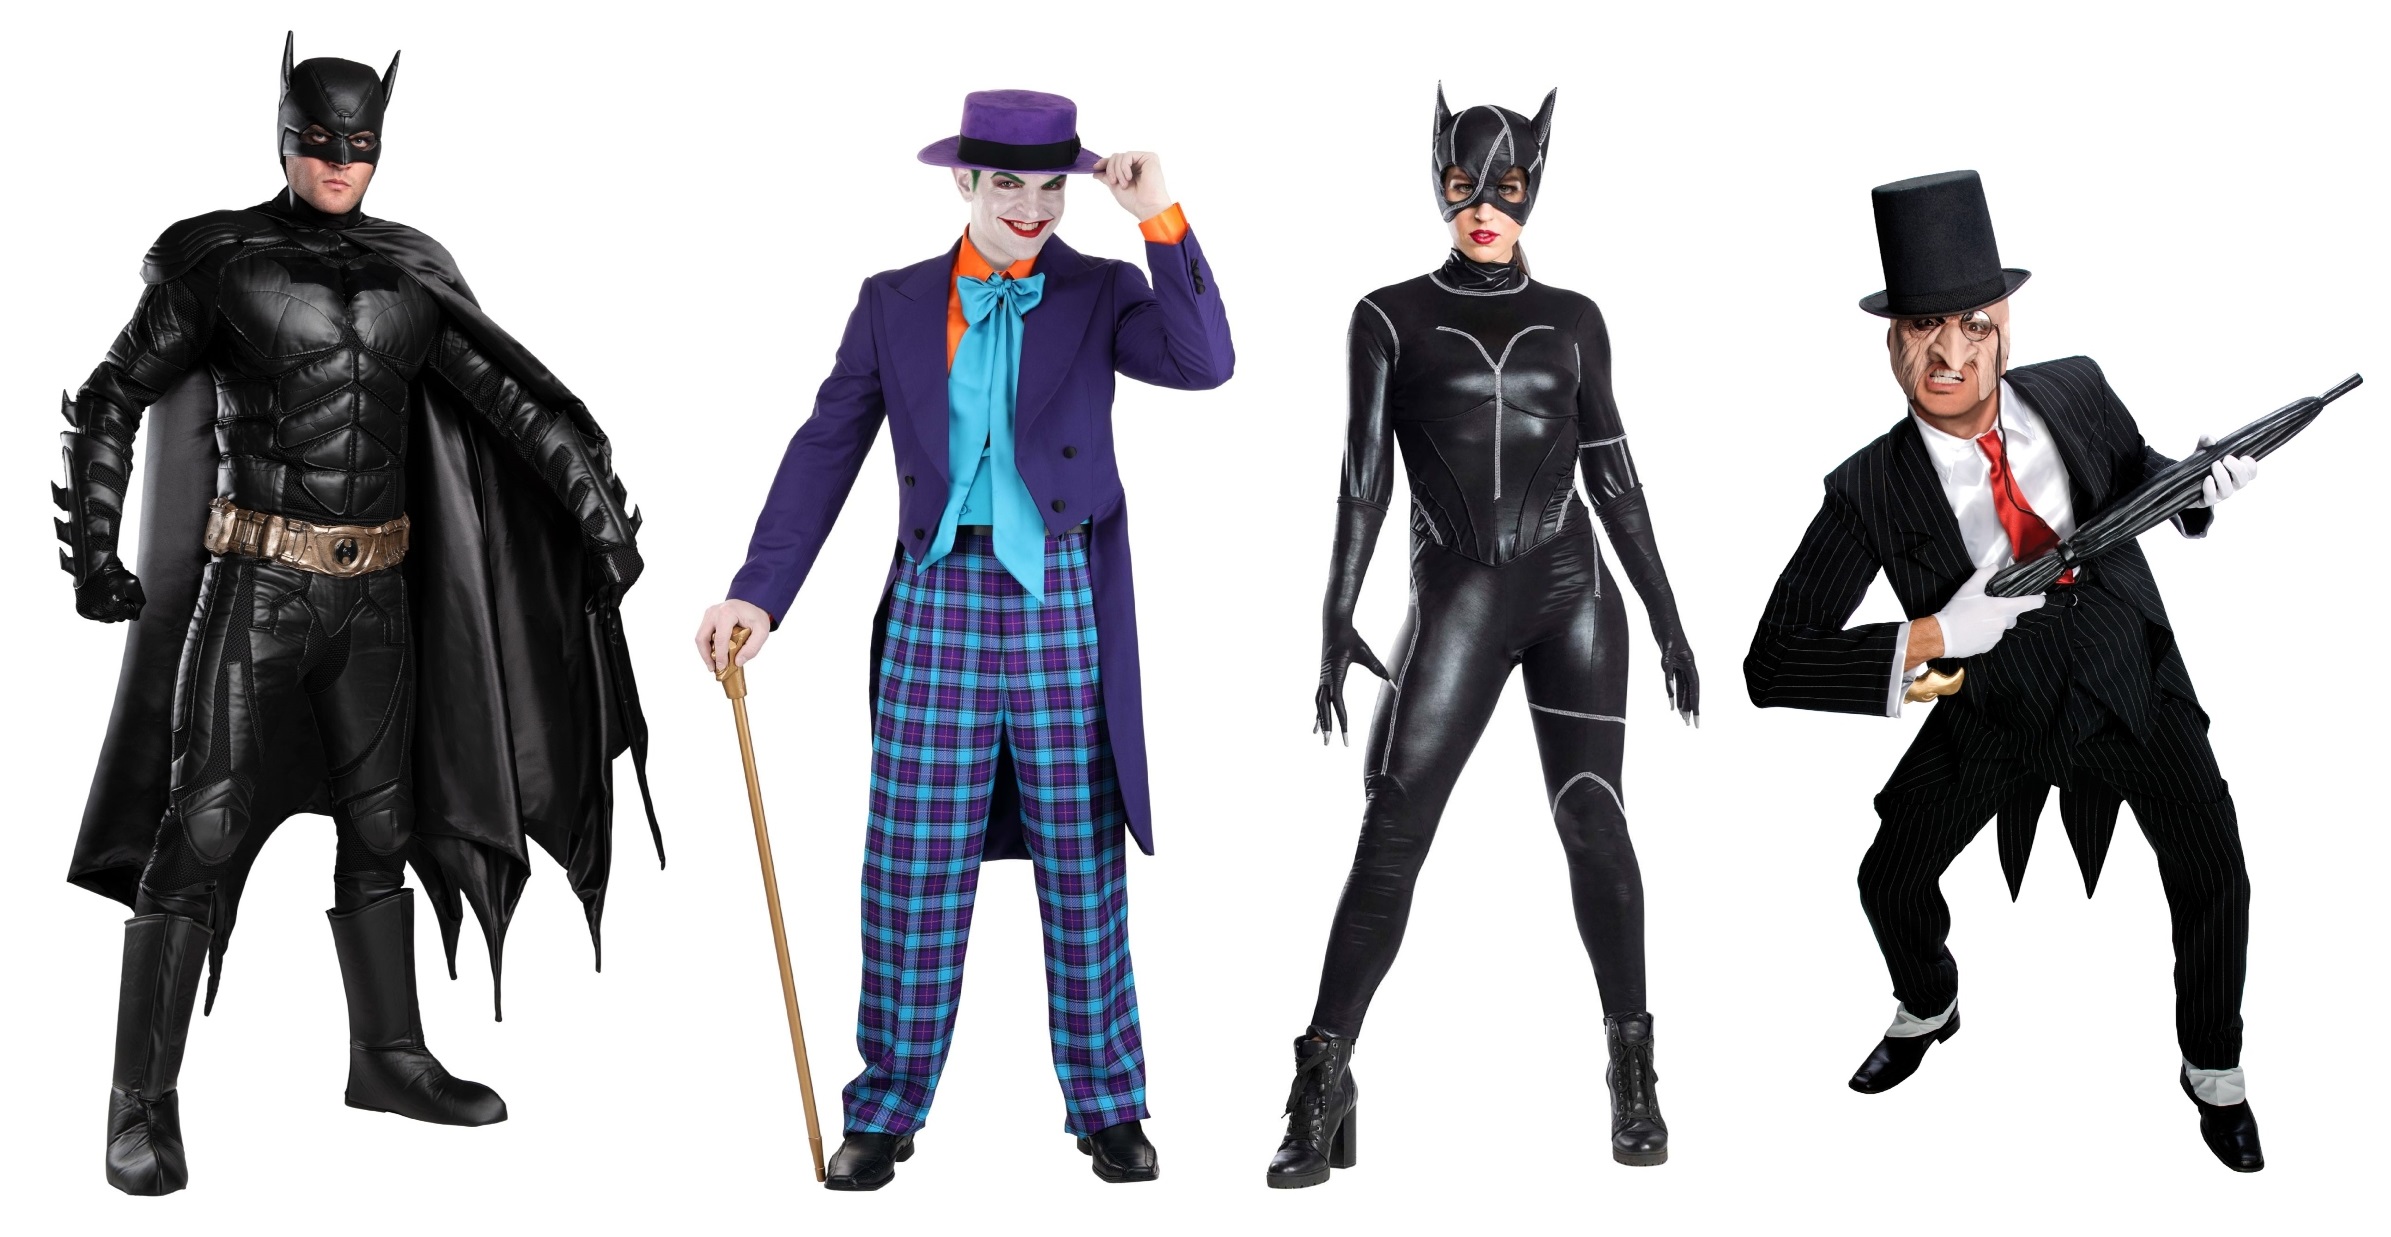 Batman Halloween Costumes